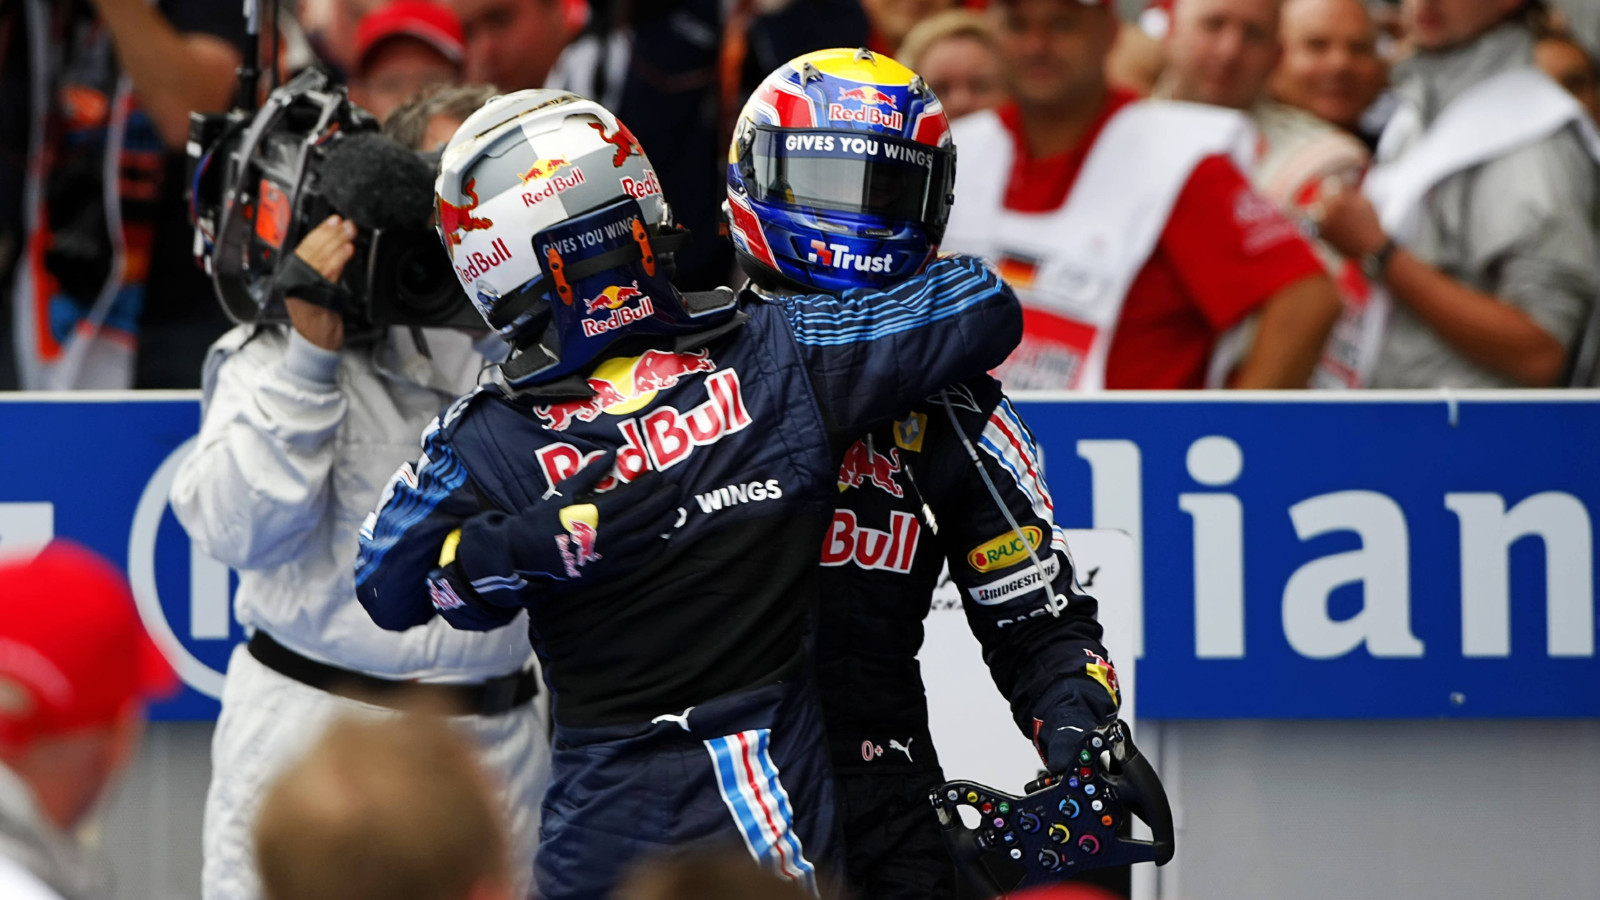 Red Bull drivers Mark Webber and Sebastian Vettel at the 2009 German Grand Prix. Nurburgring, July 2009.